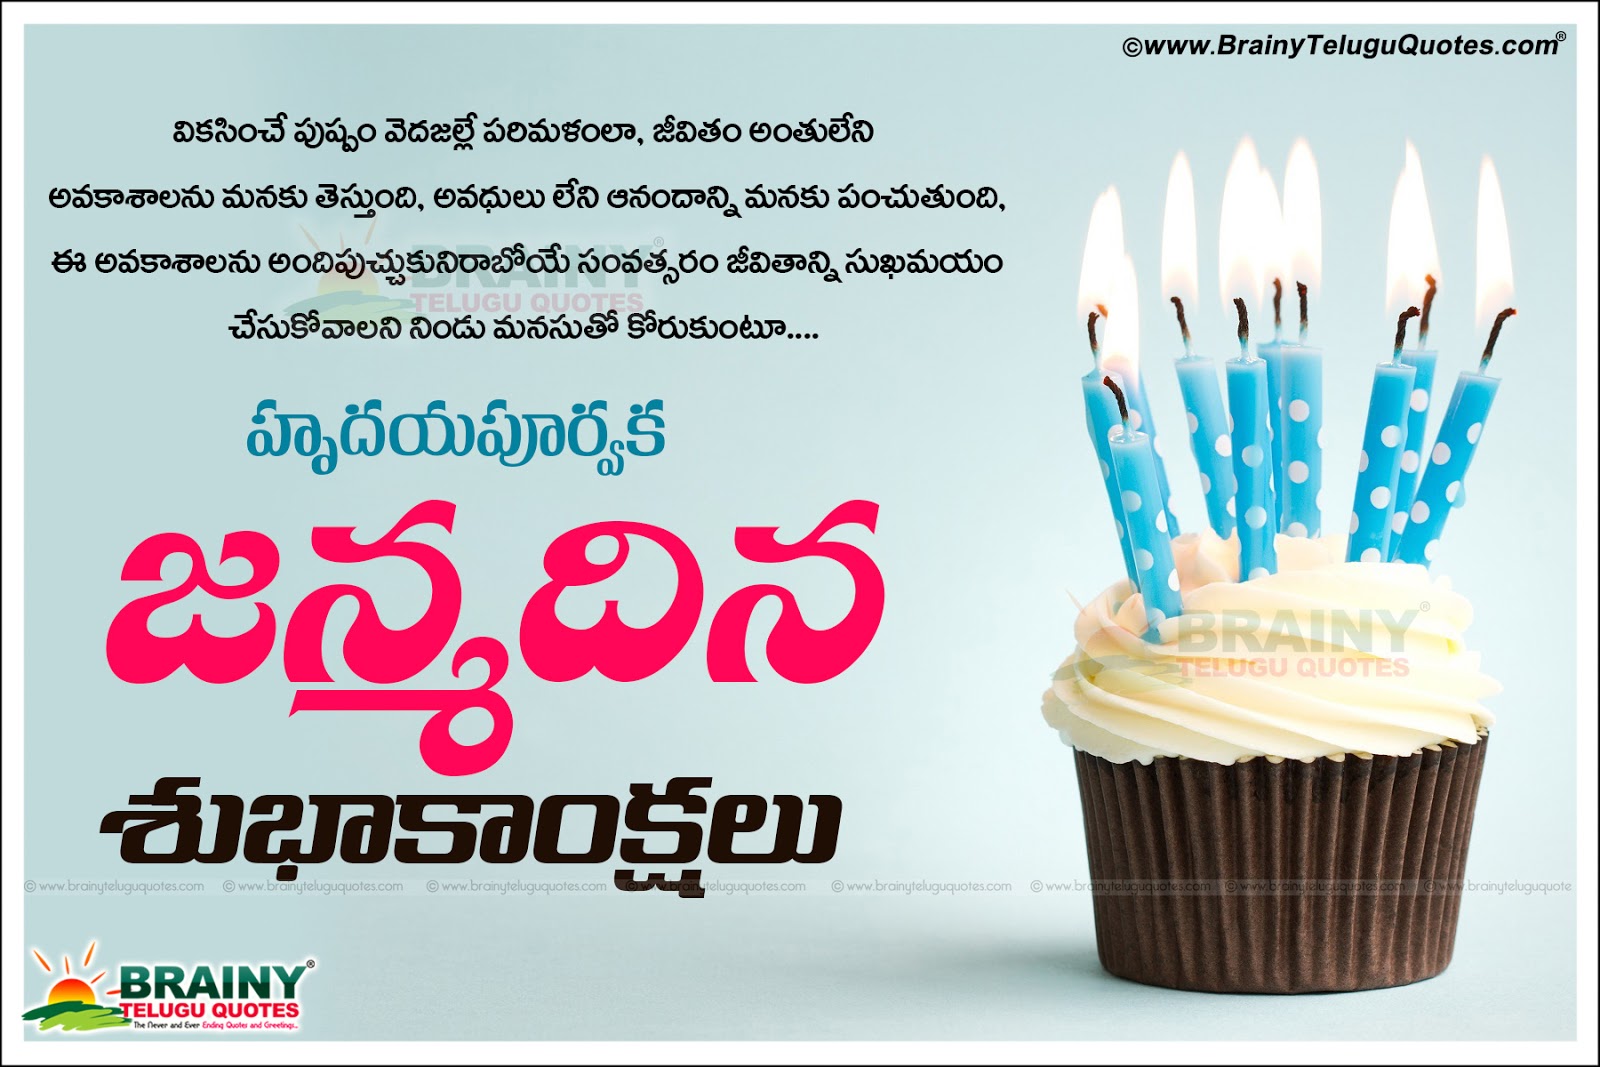 Telugu birthday greetings jspassa